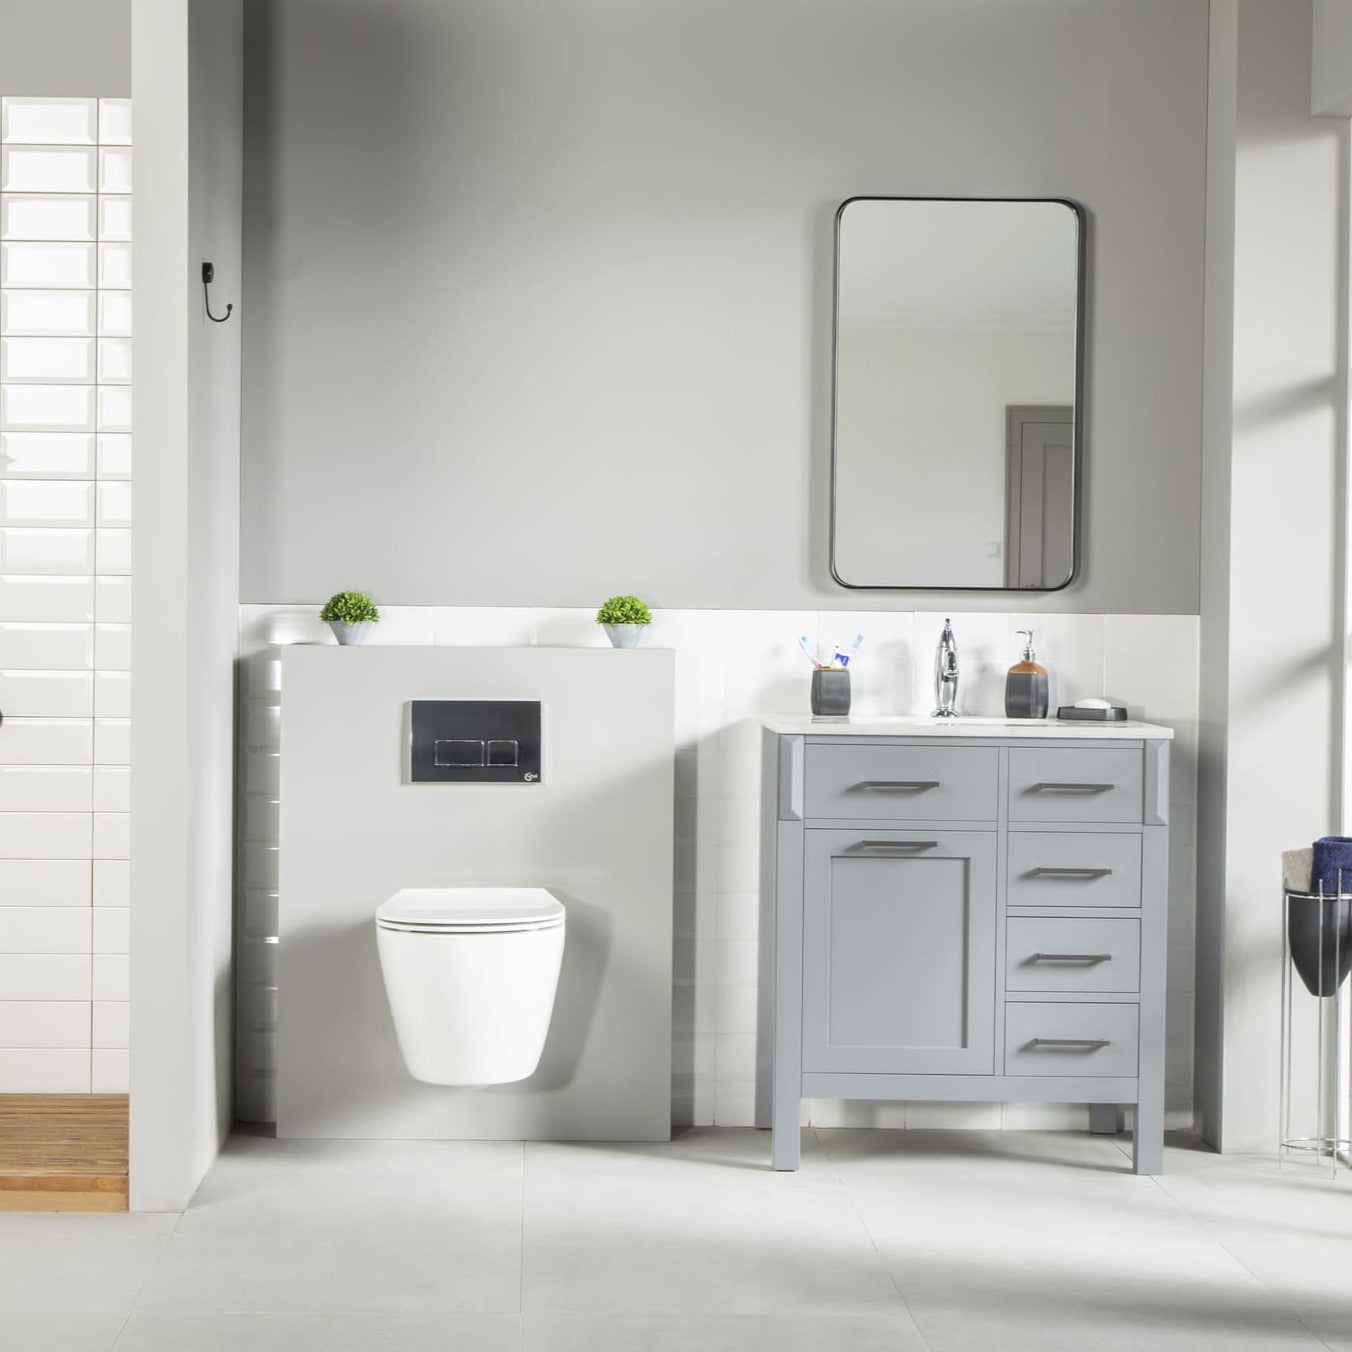 Fawna Bathroom Vanity Homelero 30"  #size_30"  #color_grey  #hardware_brushed nickel